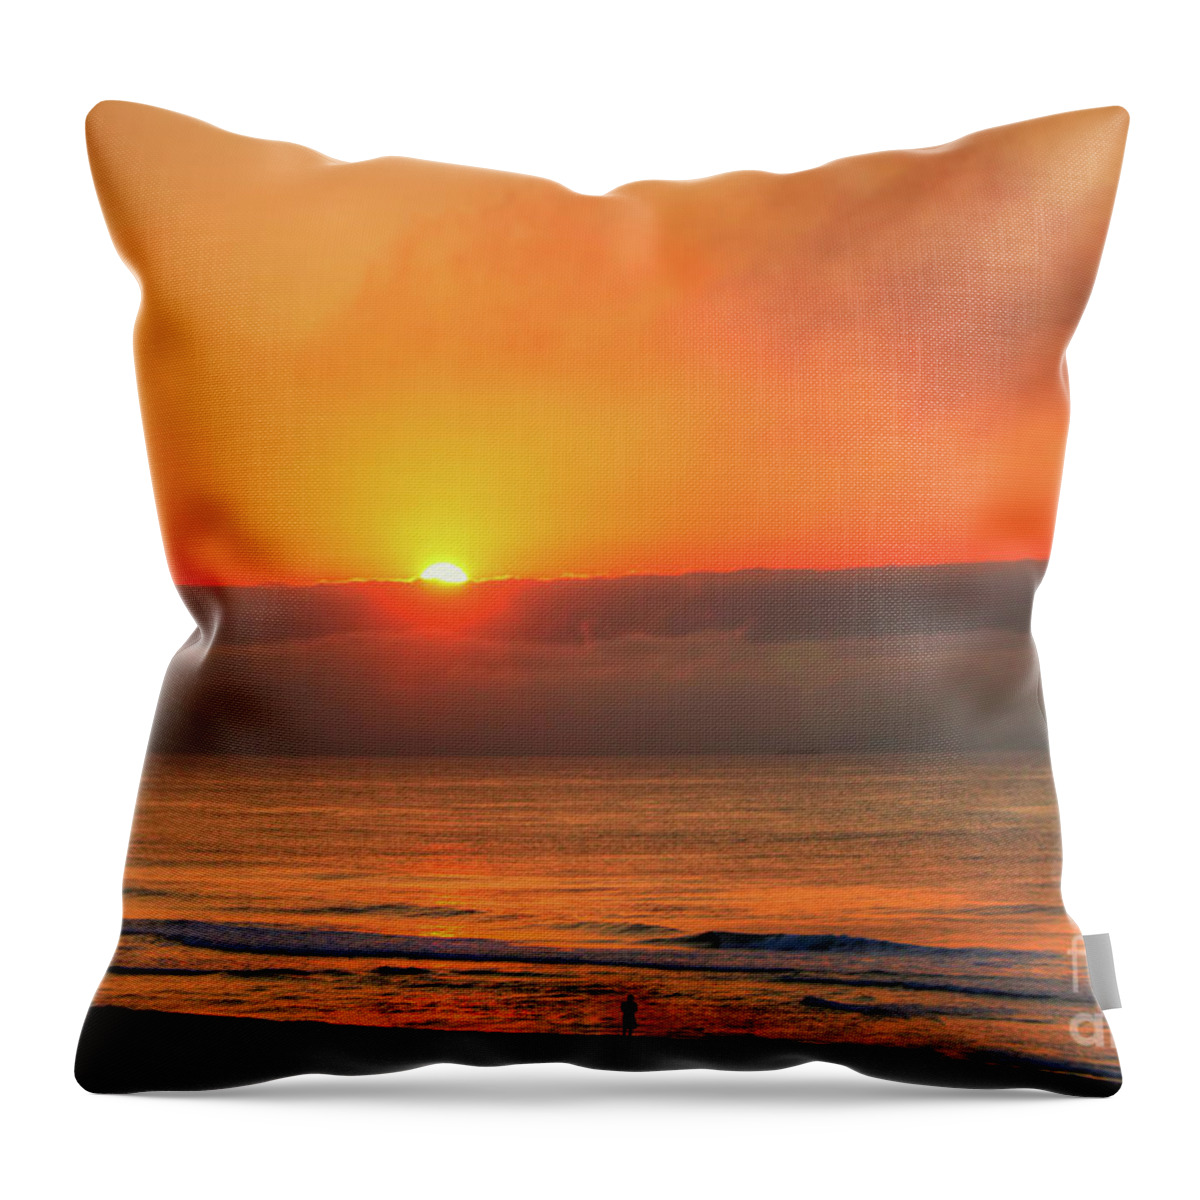 Sunrise Throw Pillow featuring the photograph Orange Sunrise On Long Beach Island by Jeff Breiman